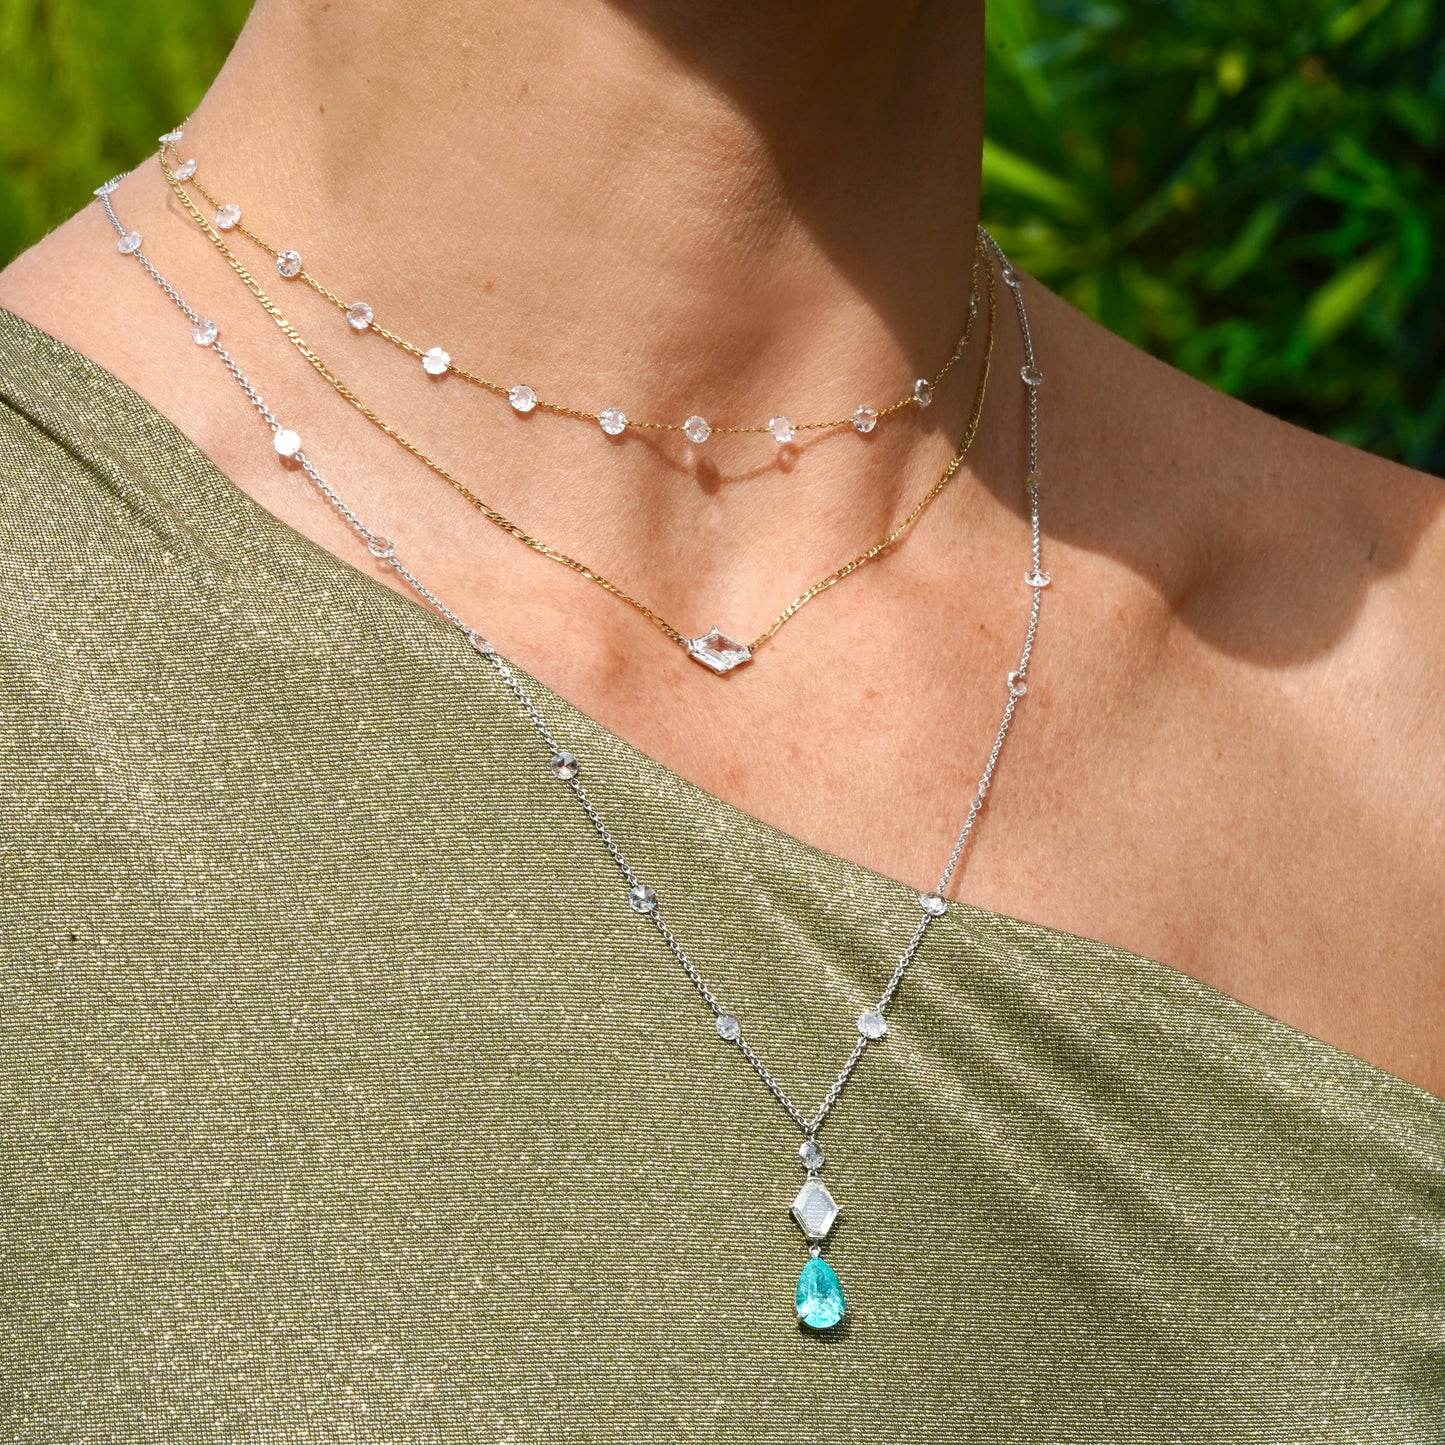 Paraiba and diamond rosary necklace